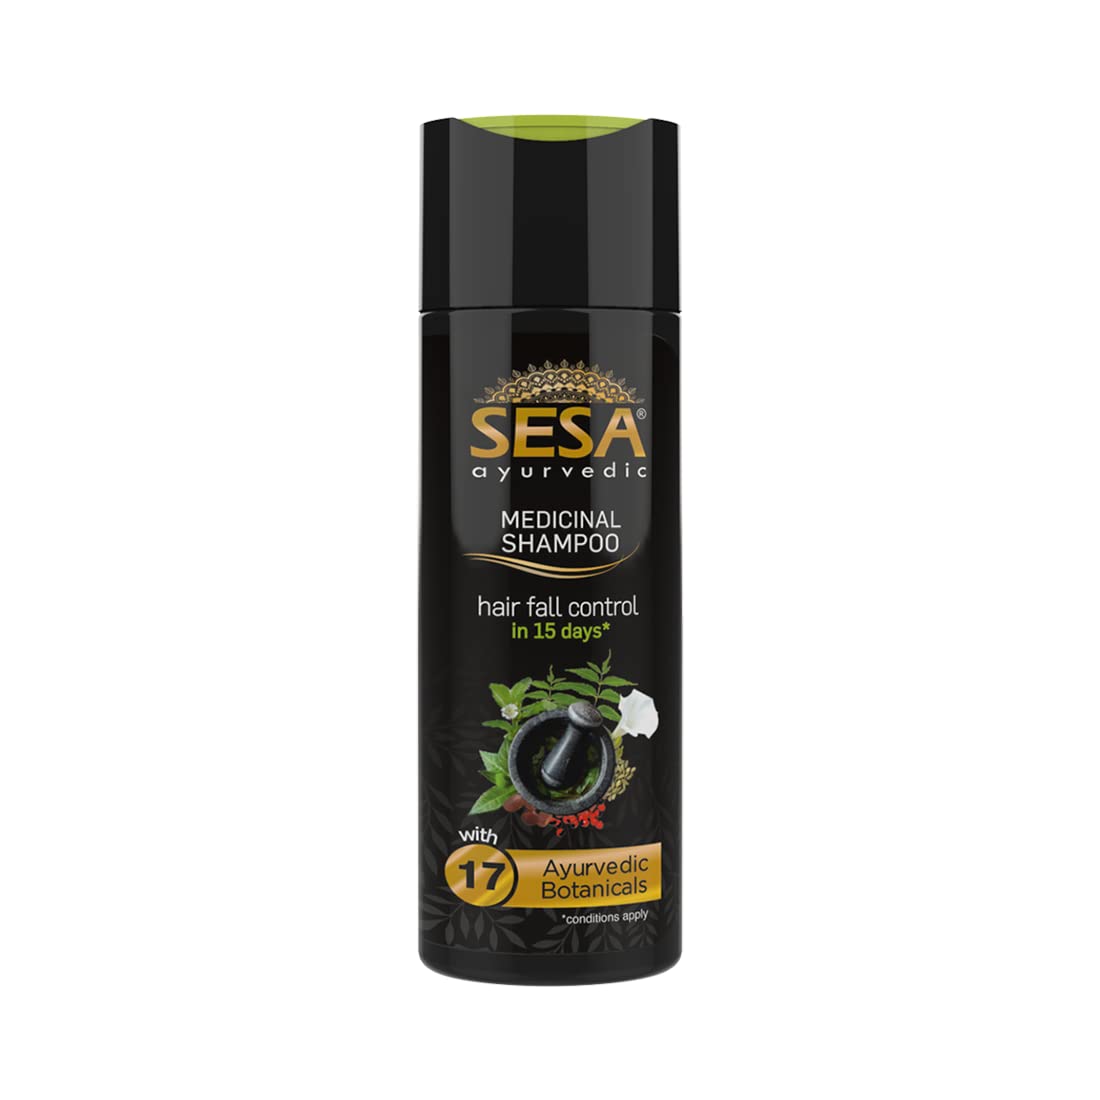 Sesa Herbals Medicinal Shampoo for Hair Fall Control and Hair Growth - 200 ml